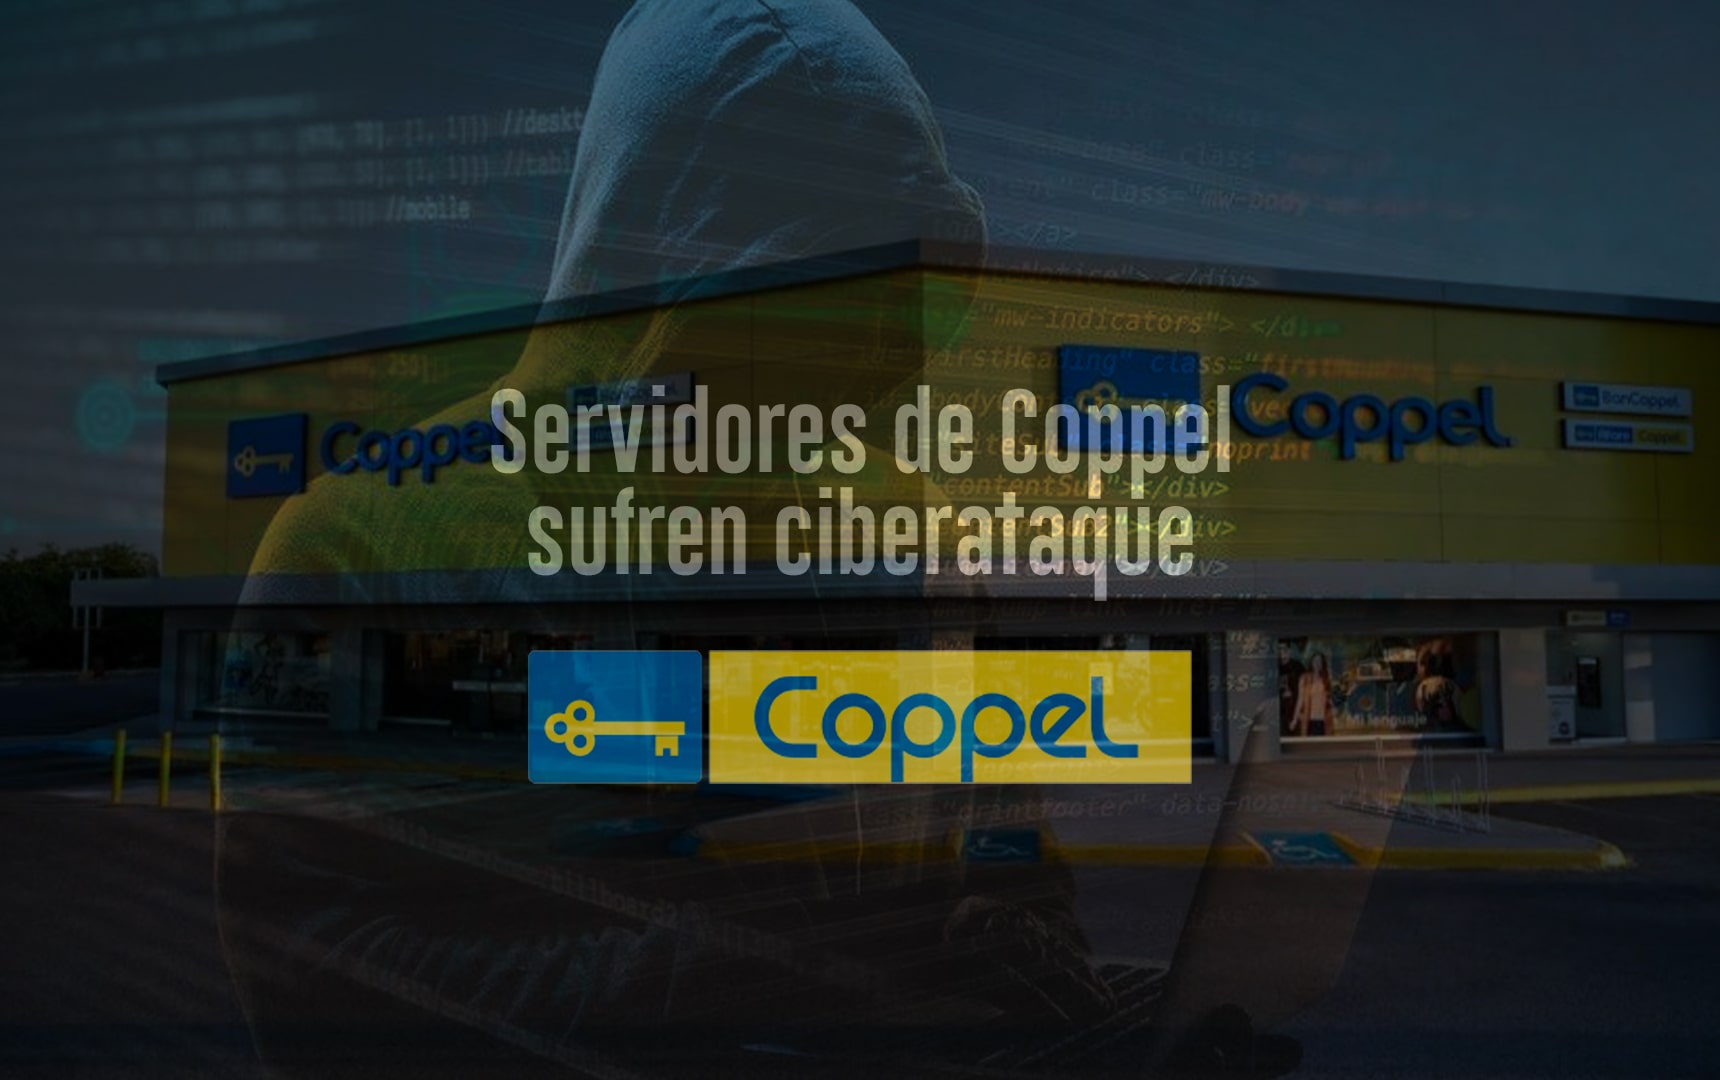 Coppel servers suffer cyber attack